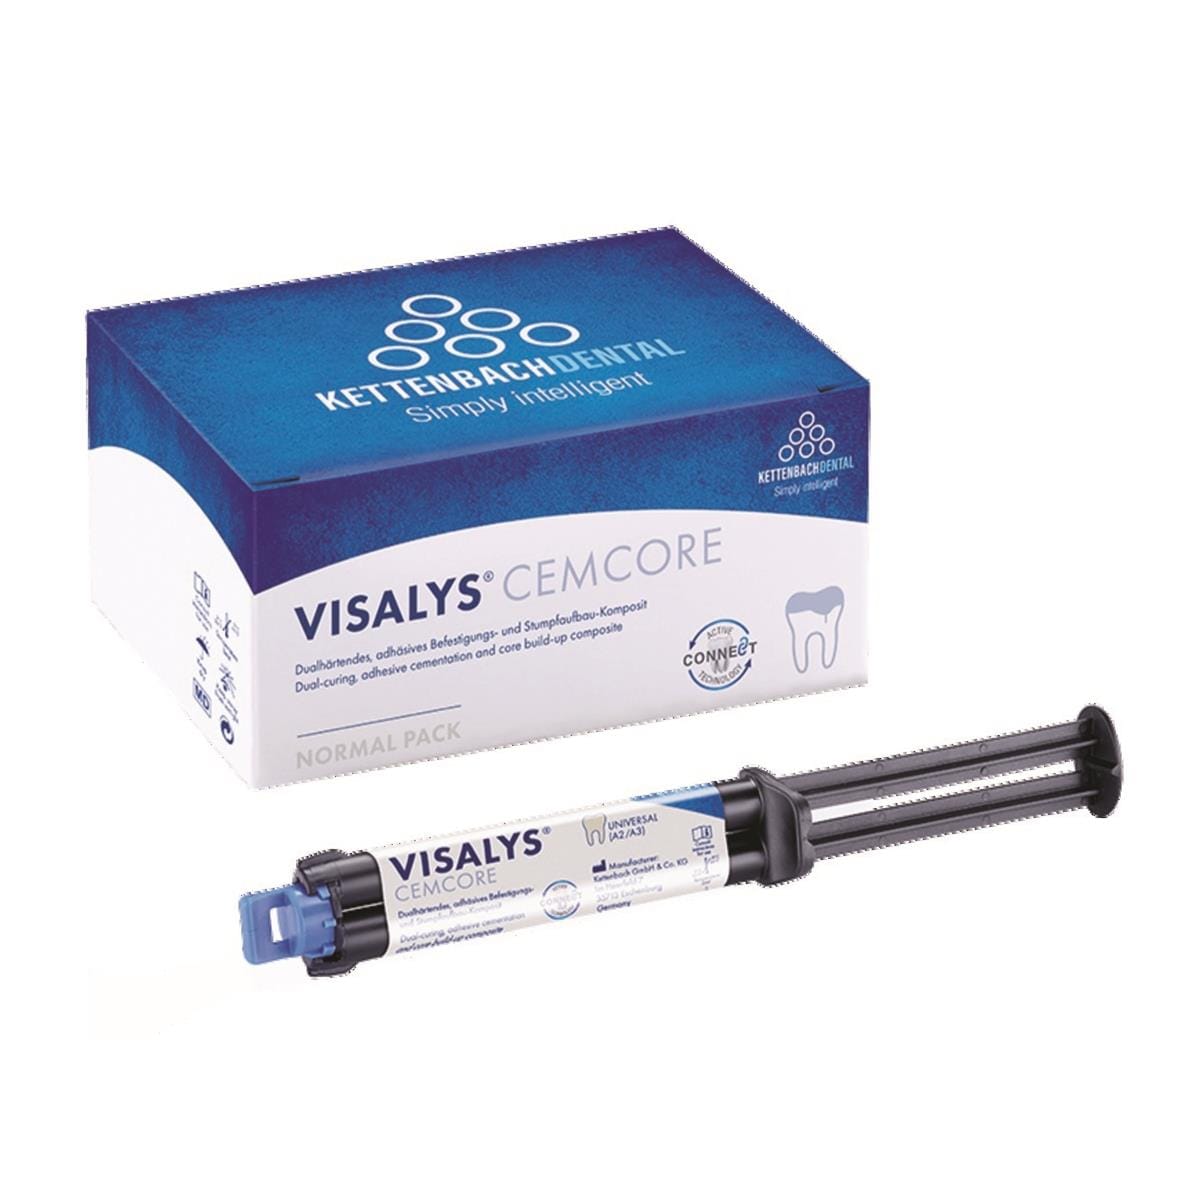 Visalys CemCore - Normal Pack - Universal A2/A3 - KETTENBACH